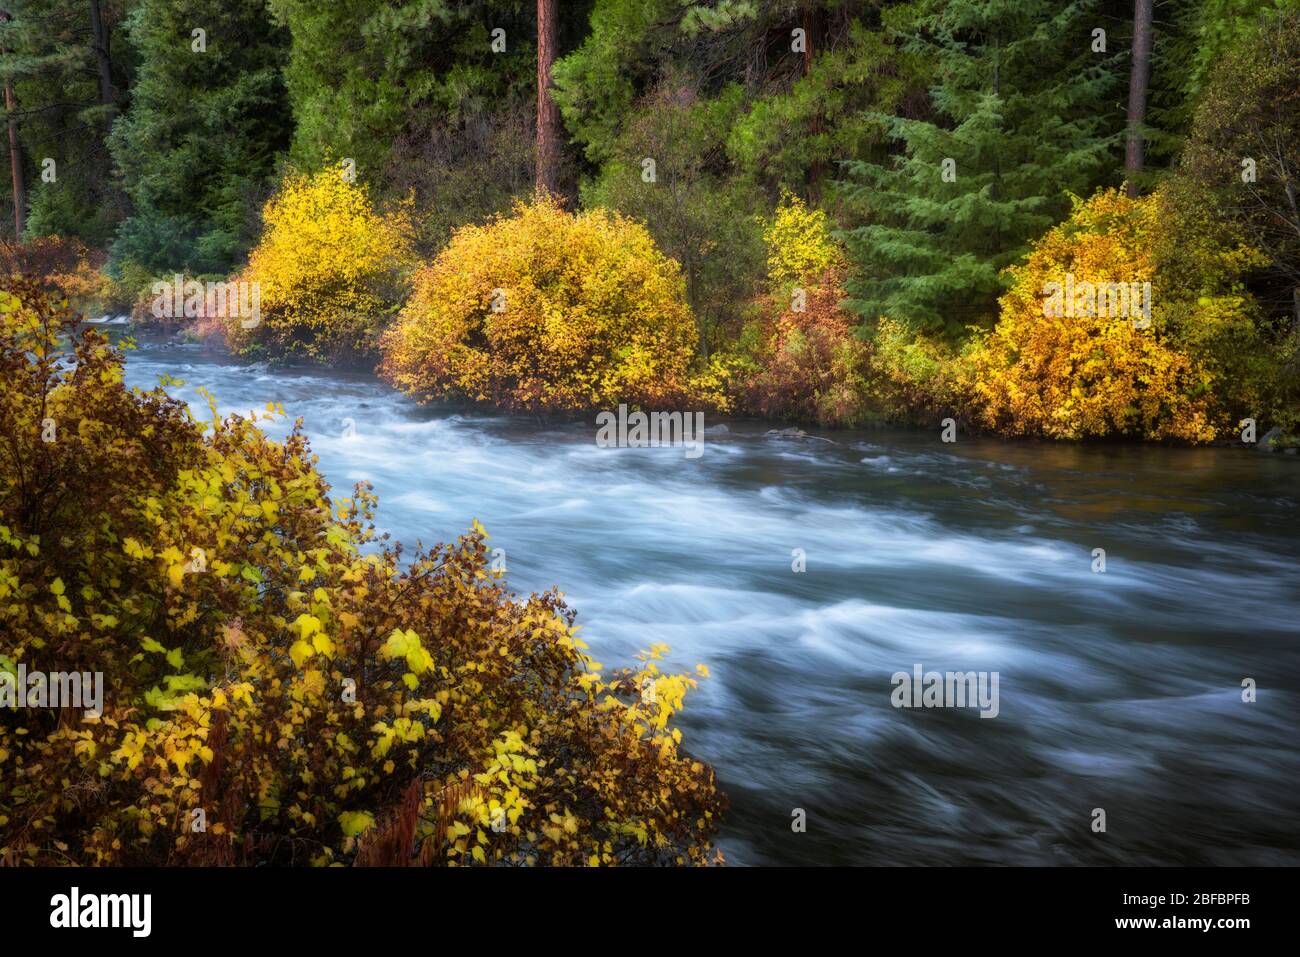 The Wild & Scenic Metolius River rushes past vibrant autumn colors near Camp Sherman in Central Oregon’s Jefferson County. Stock Photo